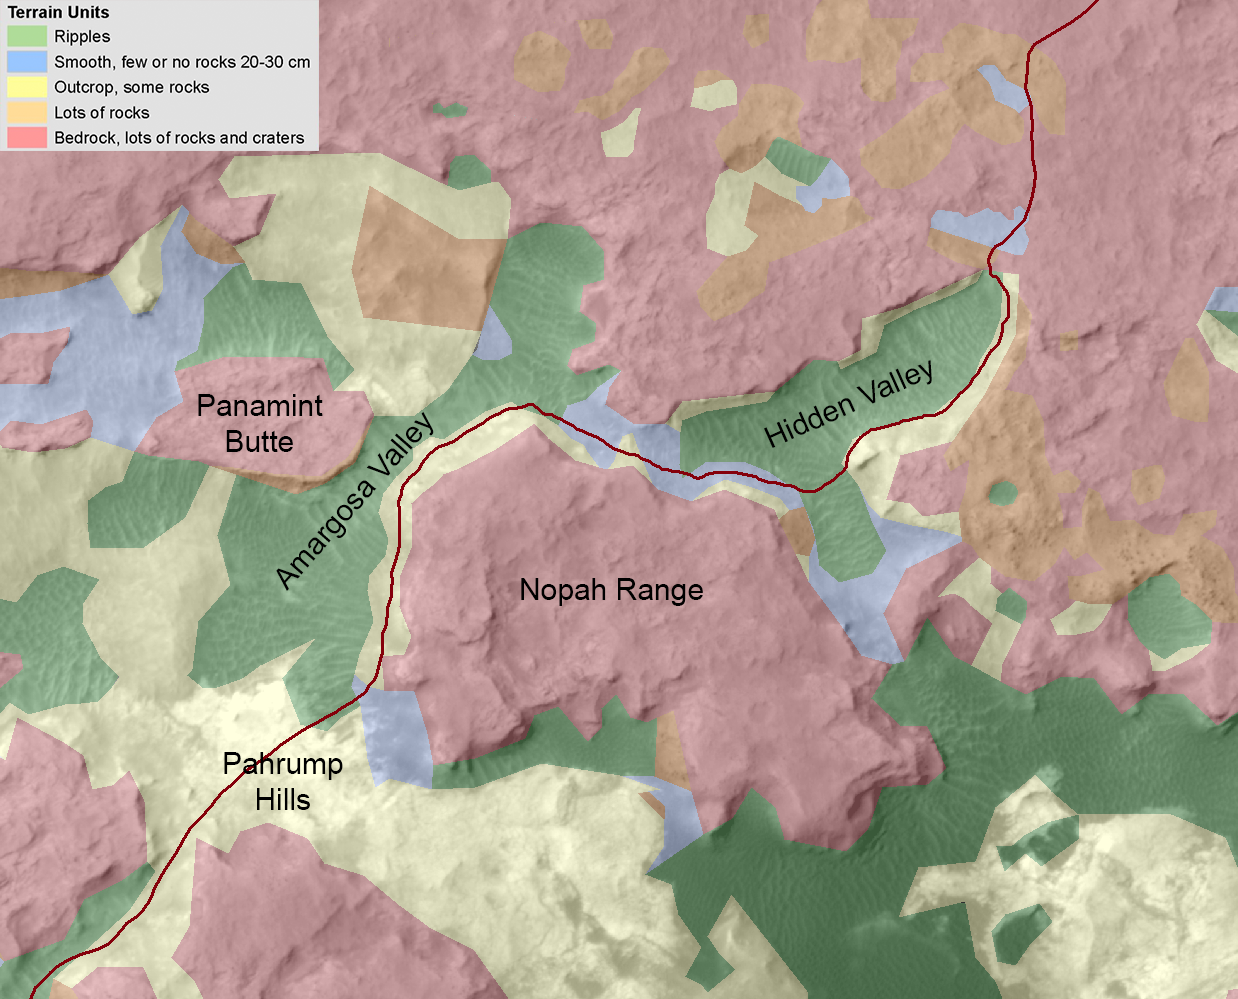 20140822_terrain-map_hv.png